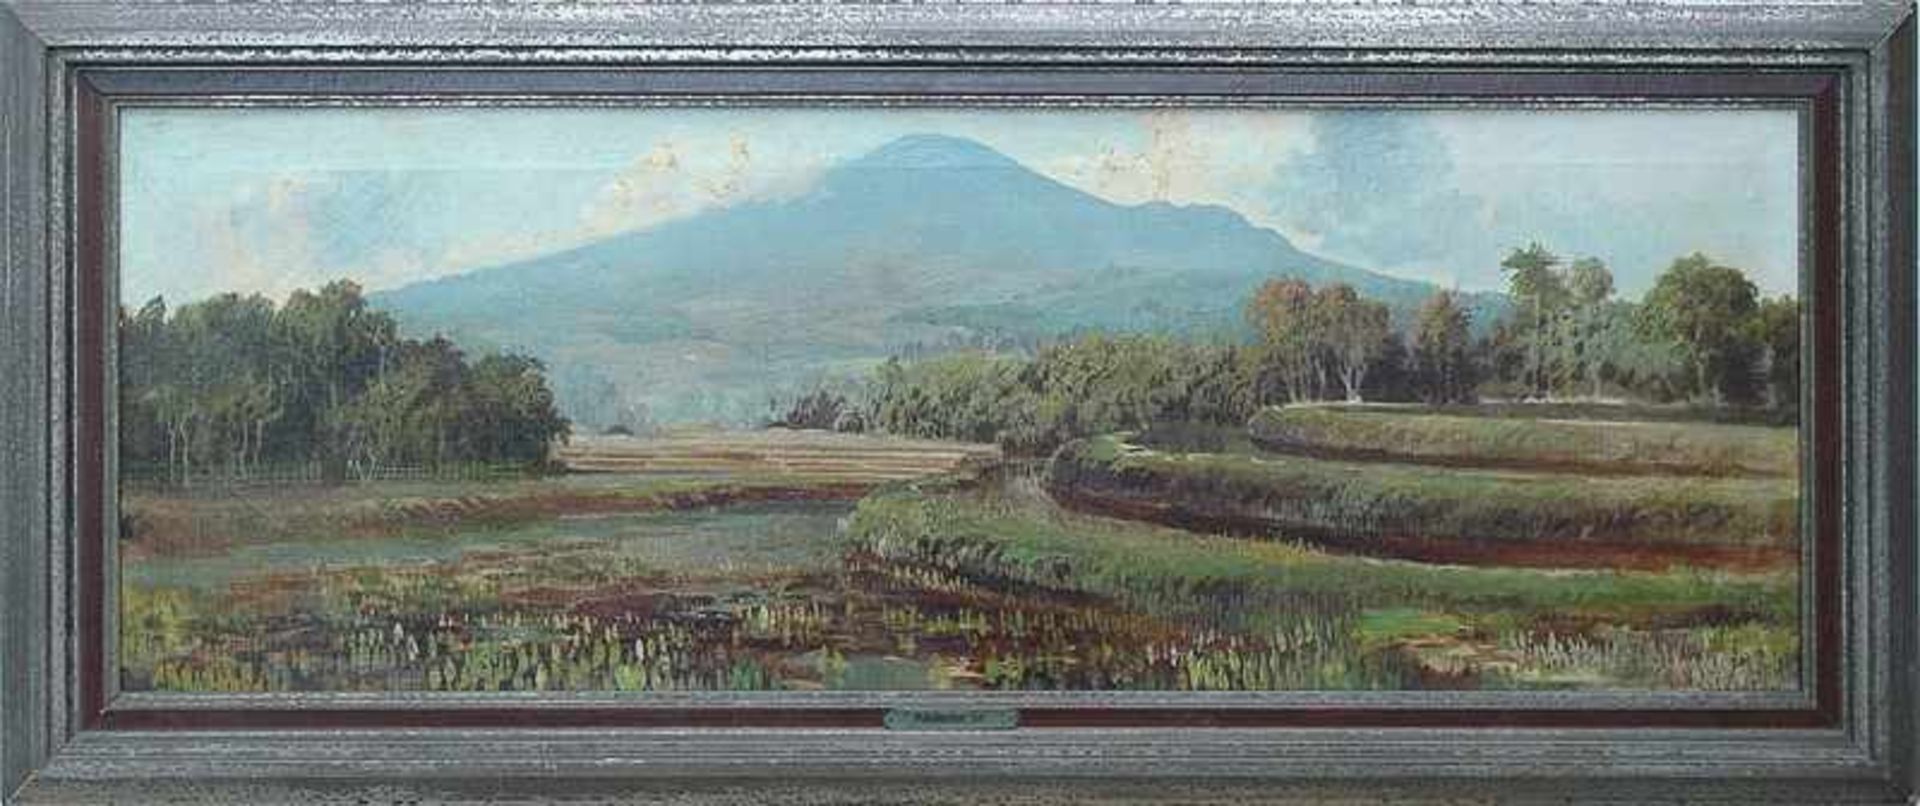 Abdullah, Surjosoebroto1878-1941, indonesischer Künstler, "Panoramaansicht in Indonesien mit